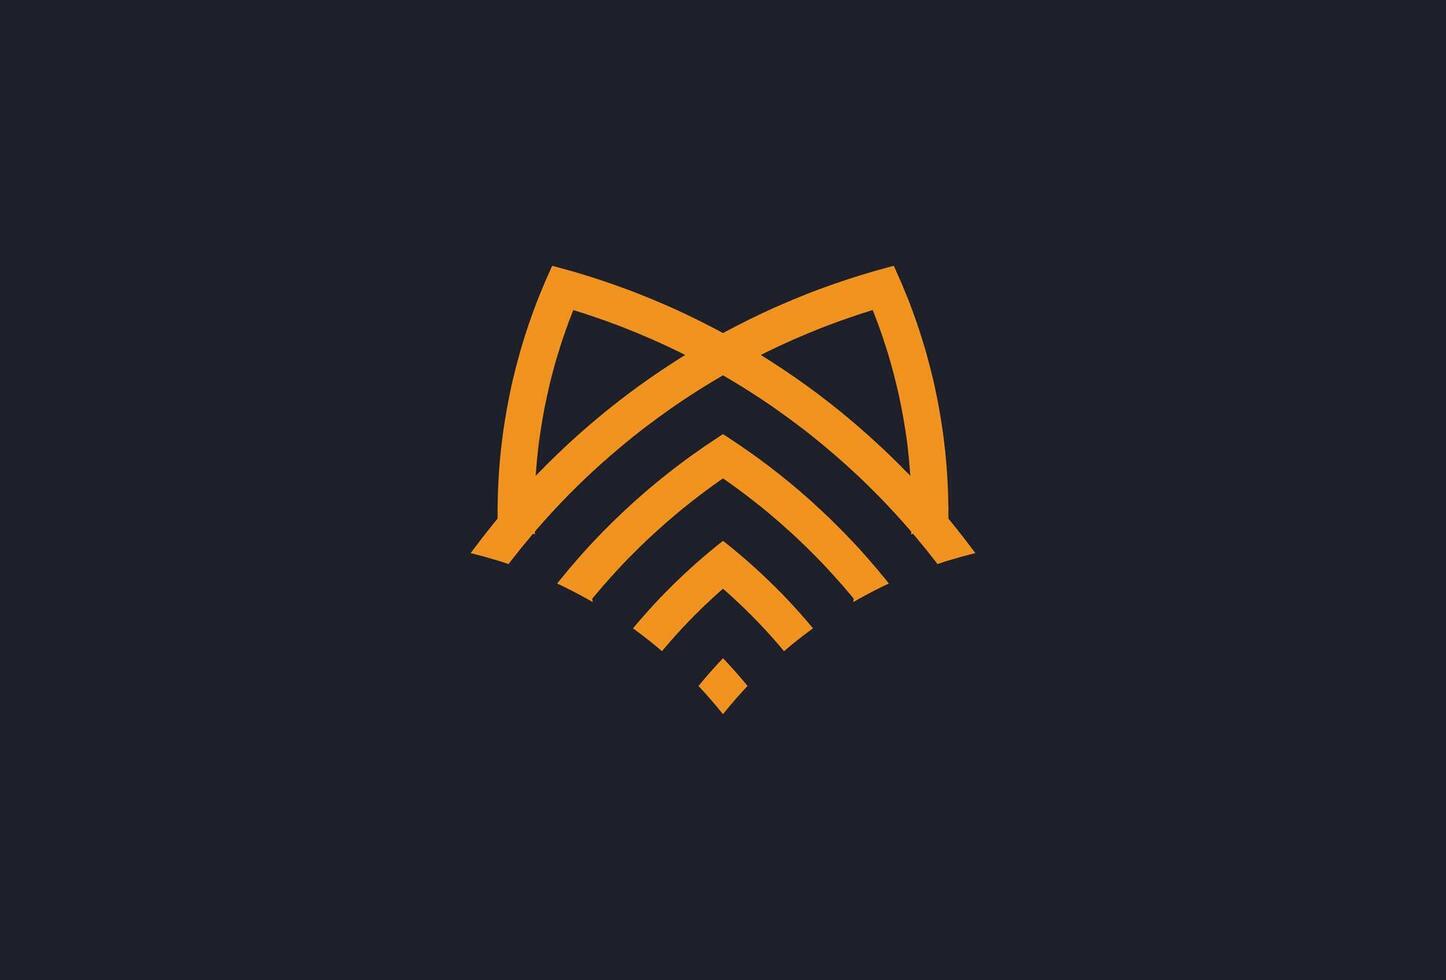 Abstract luxury Fox head logo design template, illustration vector